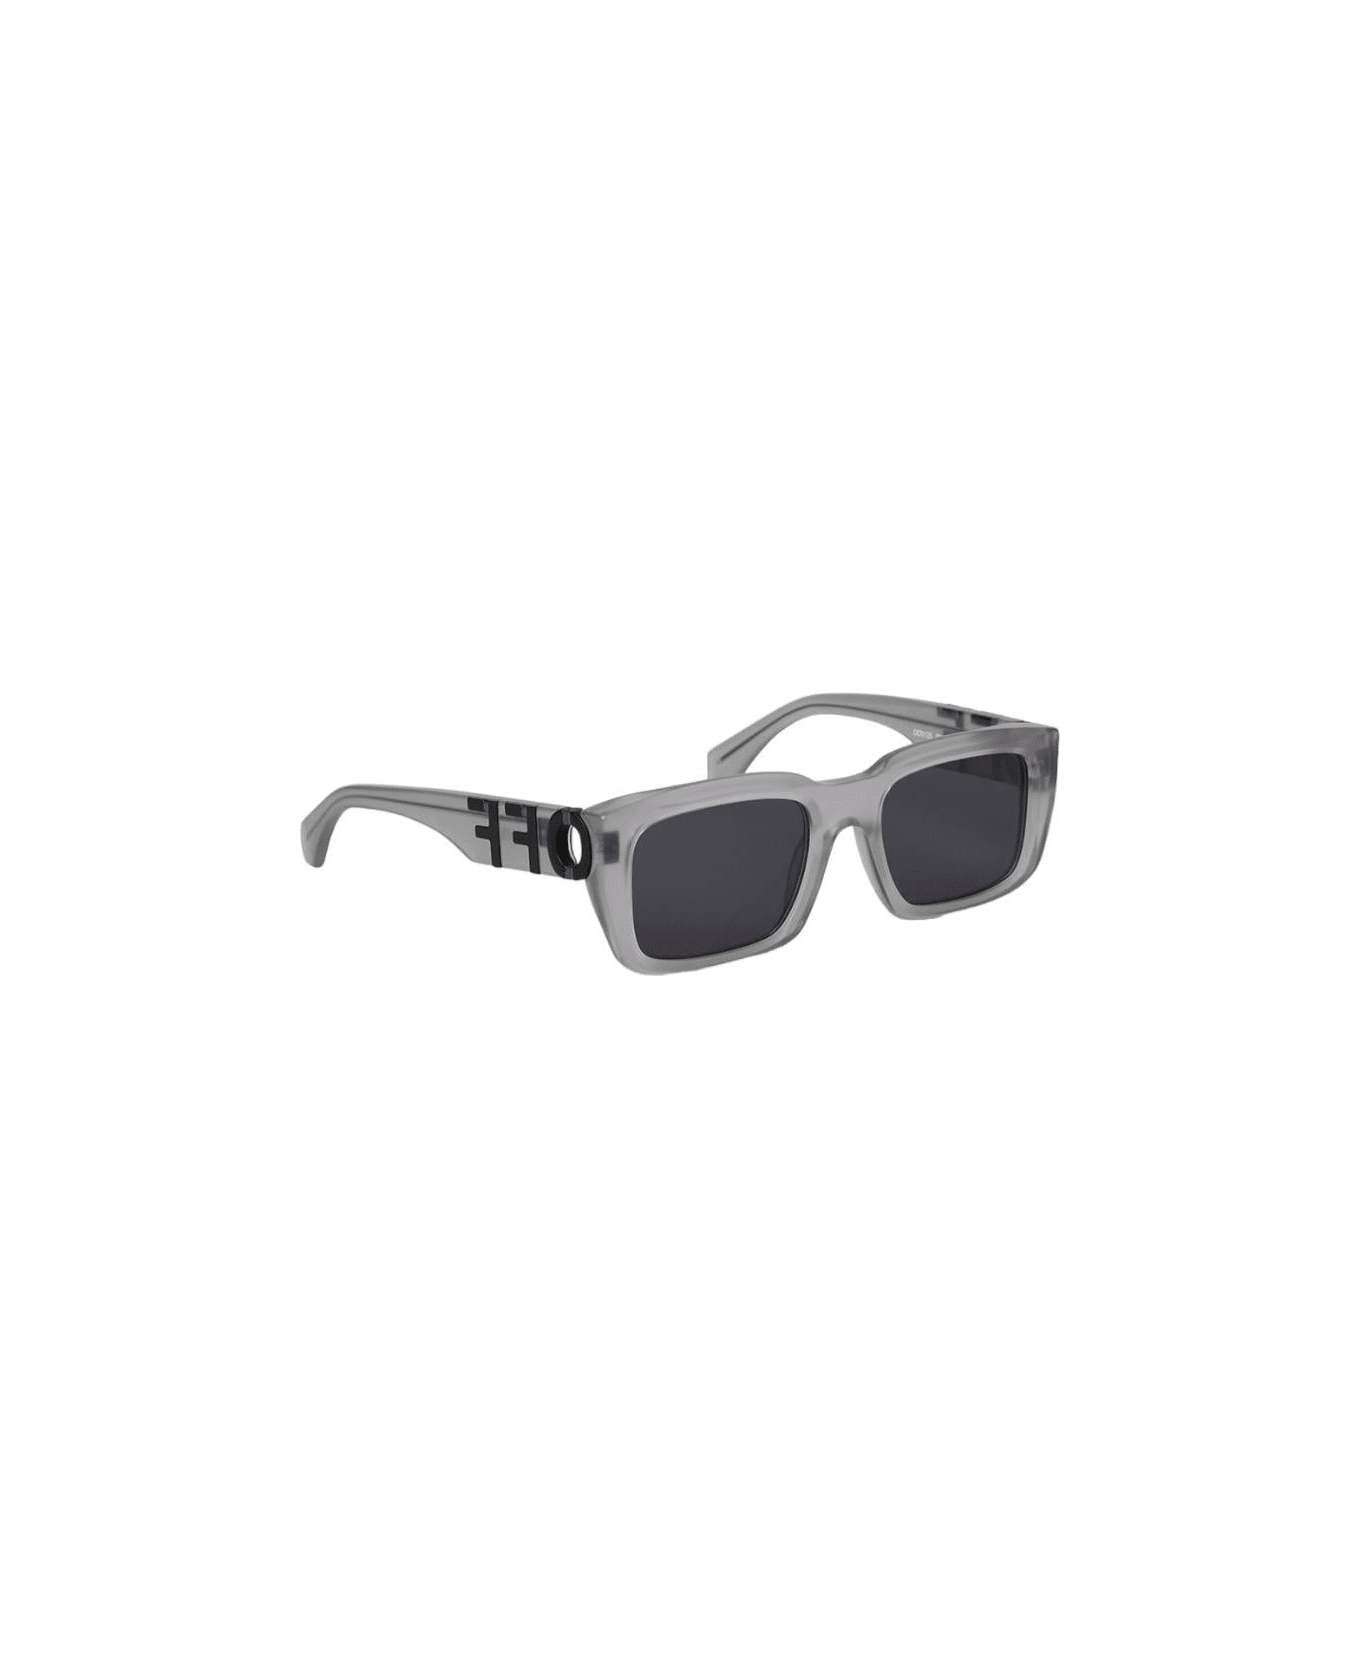 Off-White Hays - Oeri125 Sunglasses